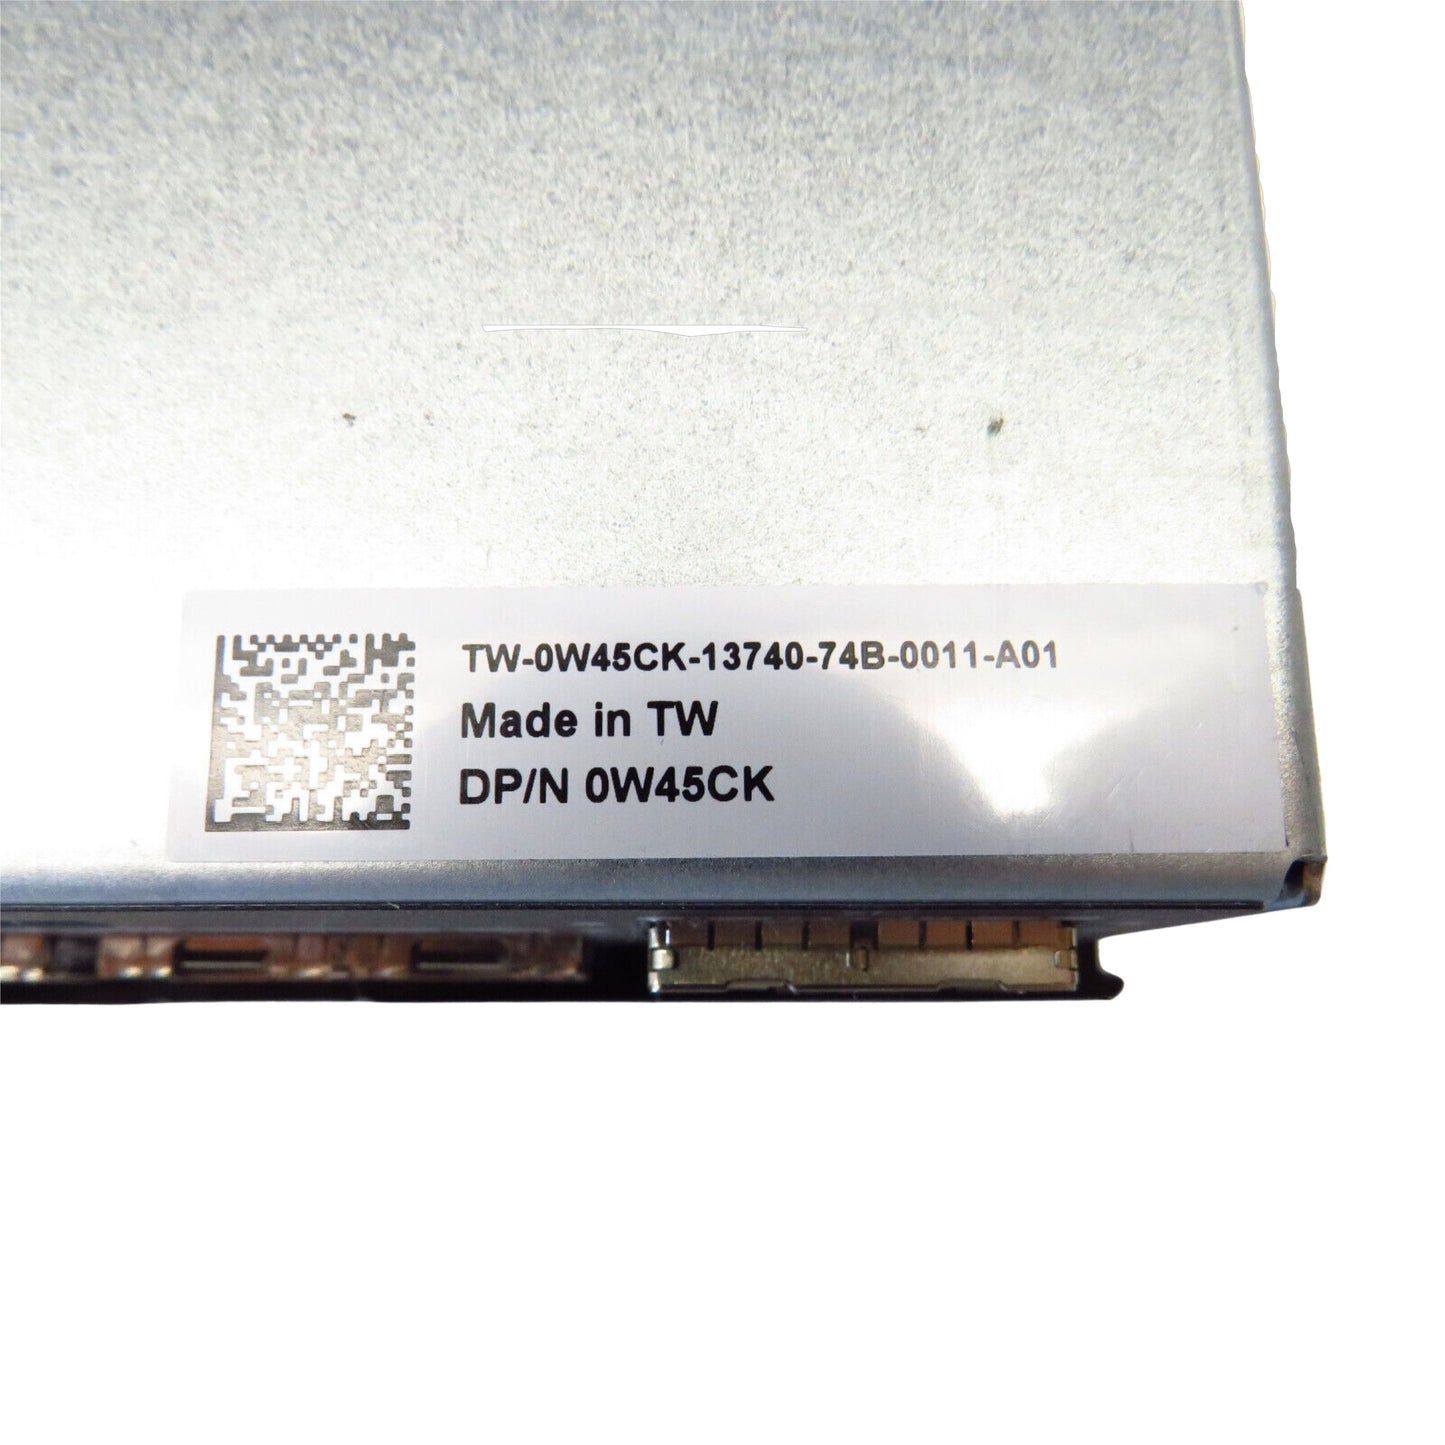 Dell W45CK Quad Port 16GB Fibre Channel Controller for PowerVault MD3860F (Refurbished)